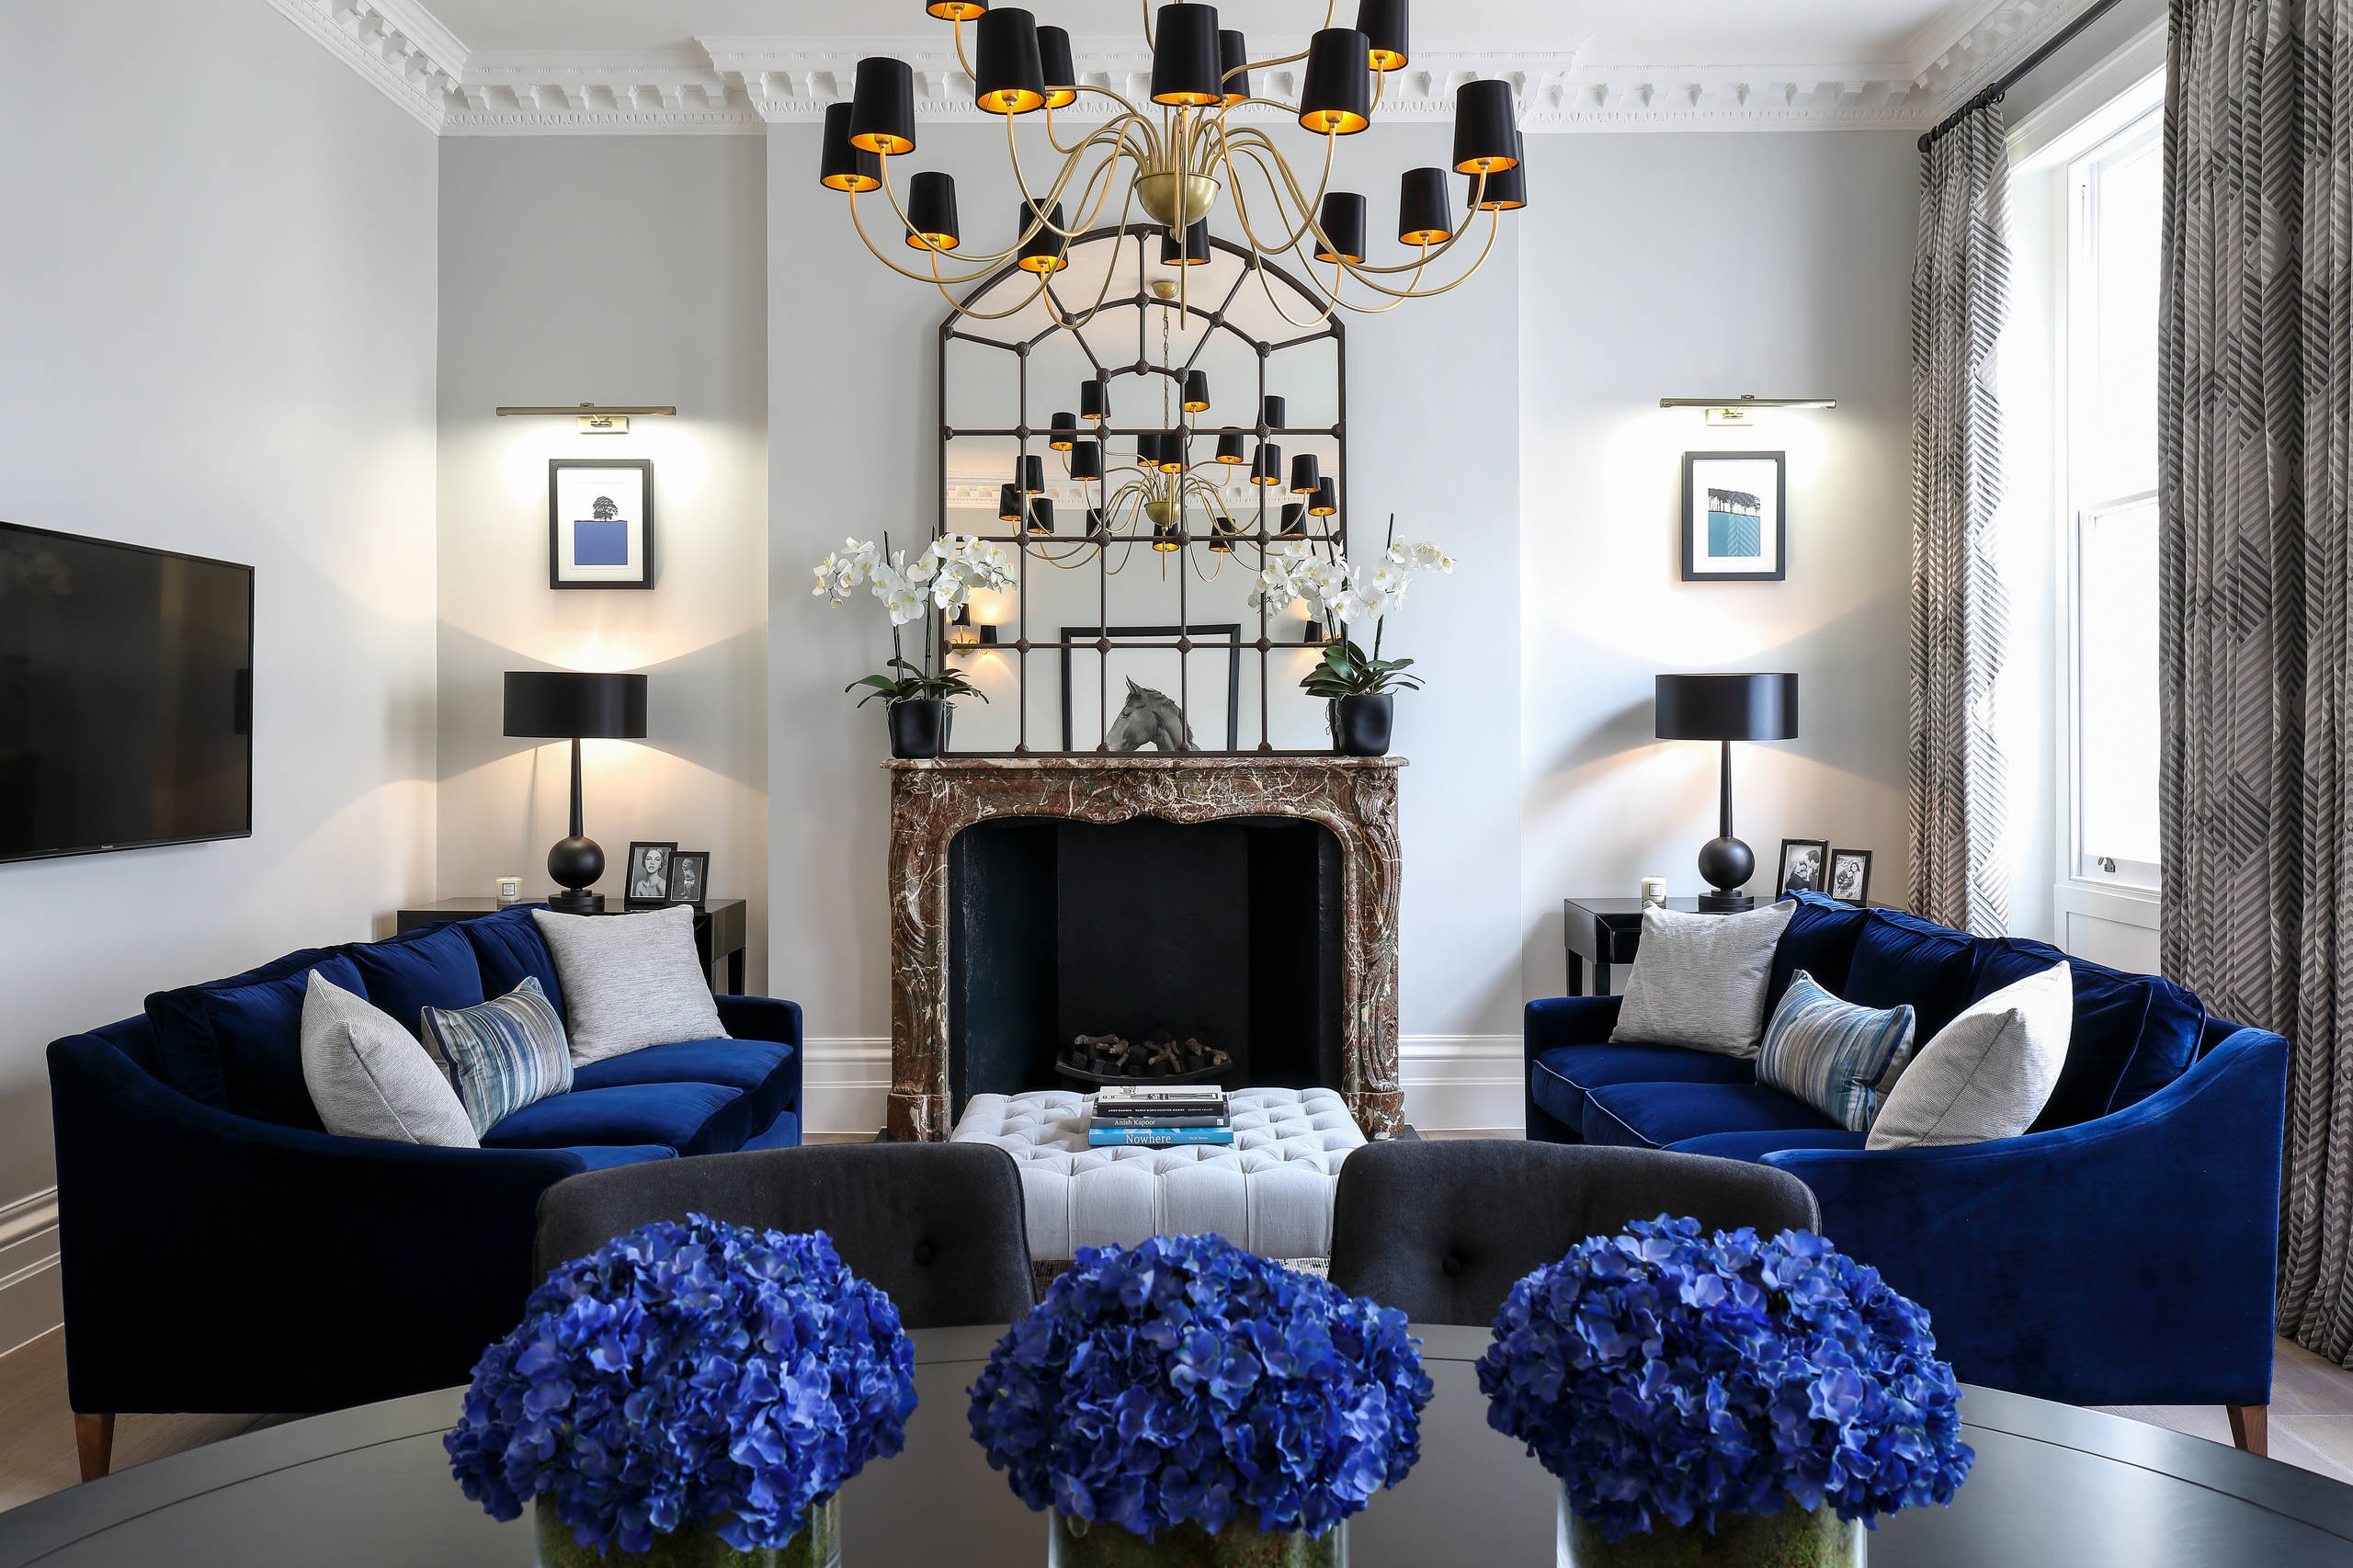 Elegant Room With Bright Blue Furniture